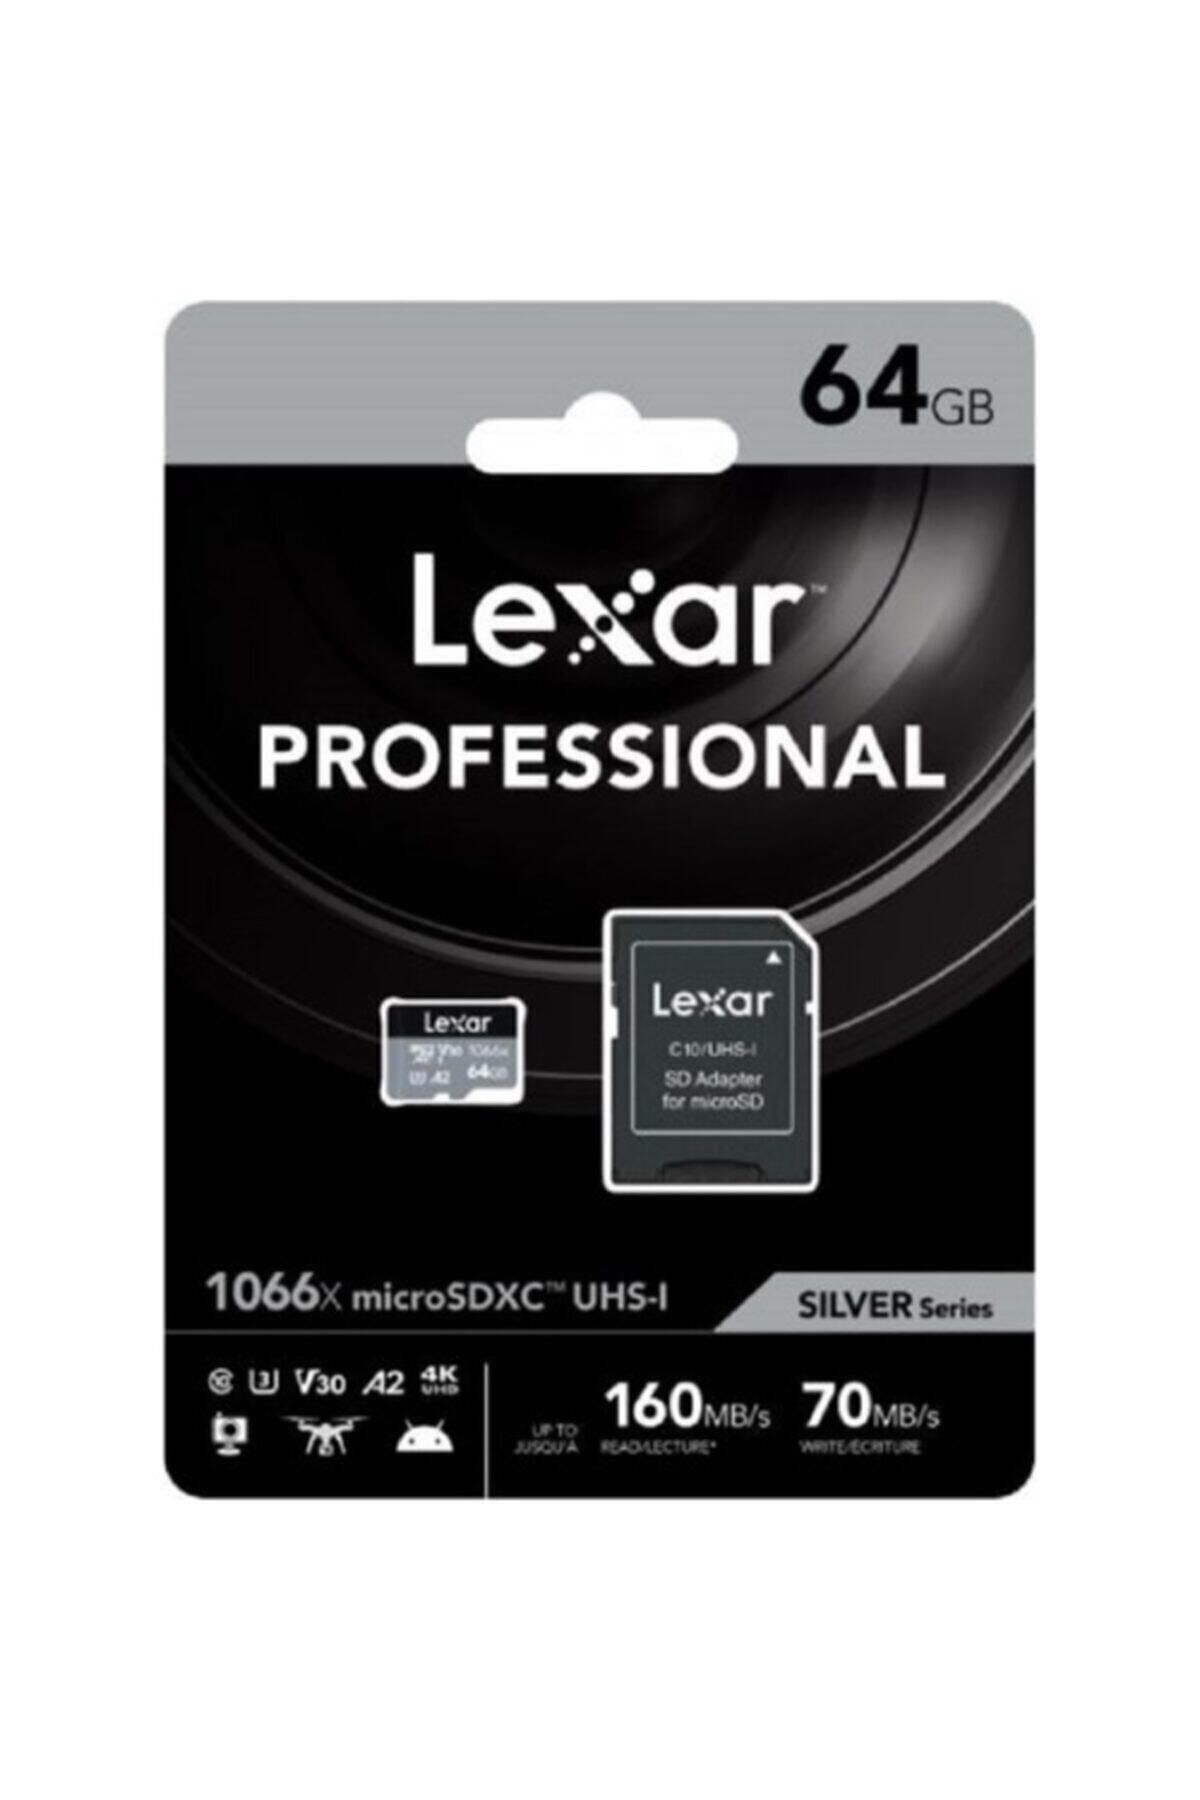 Lexar 64gb 1066x Microsdxc Uhs-ı U3 V30 A2 C10 4k Uhd 160m Hafıza Kartı Sd Adaptör (SİLVER SERİES)